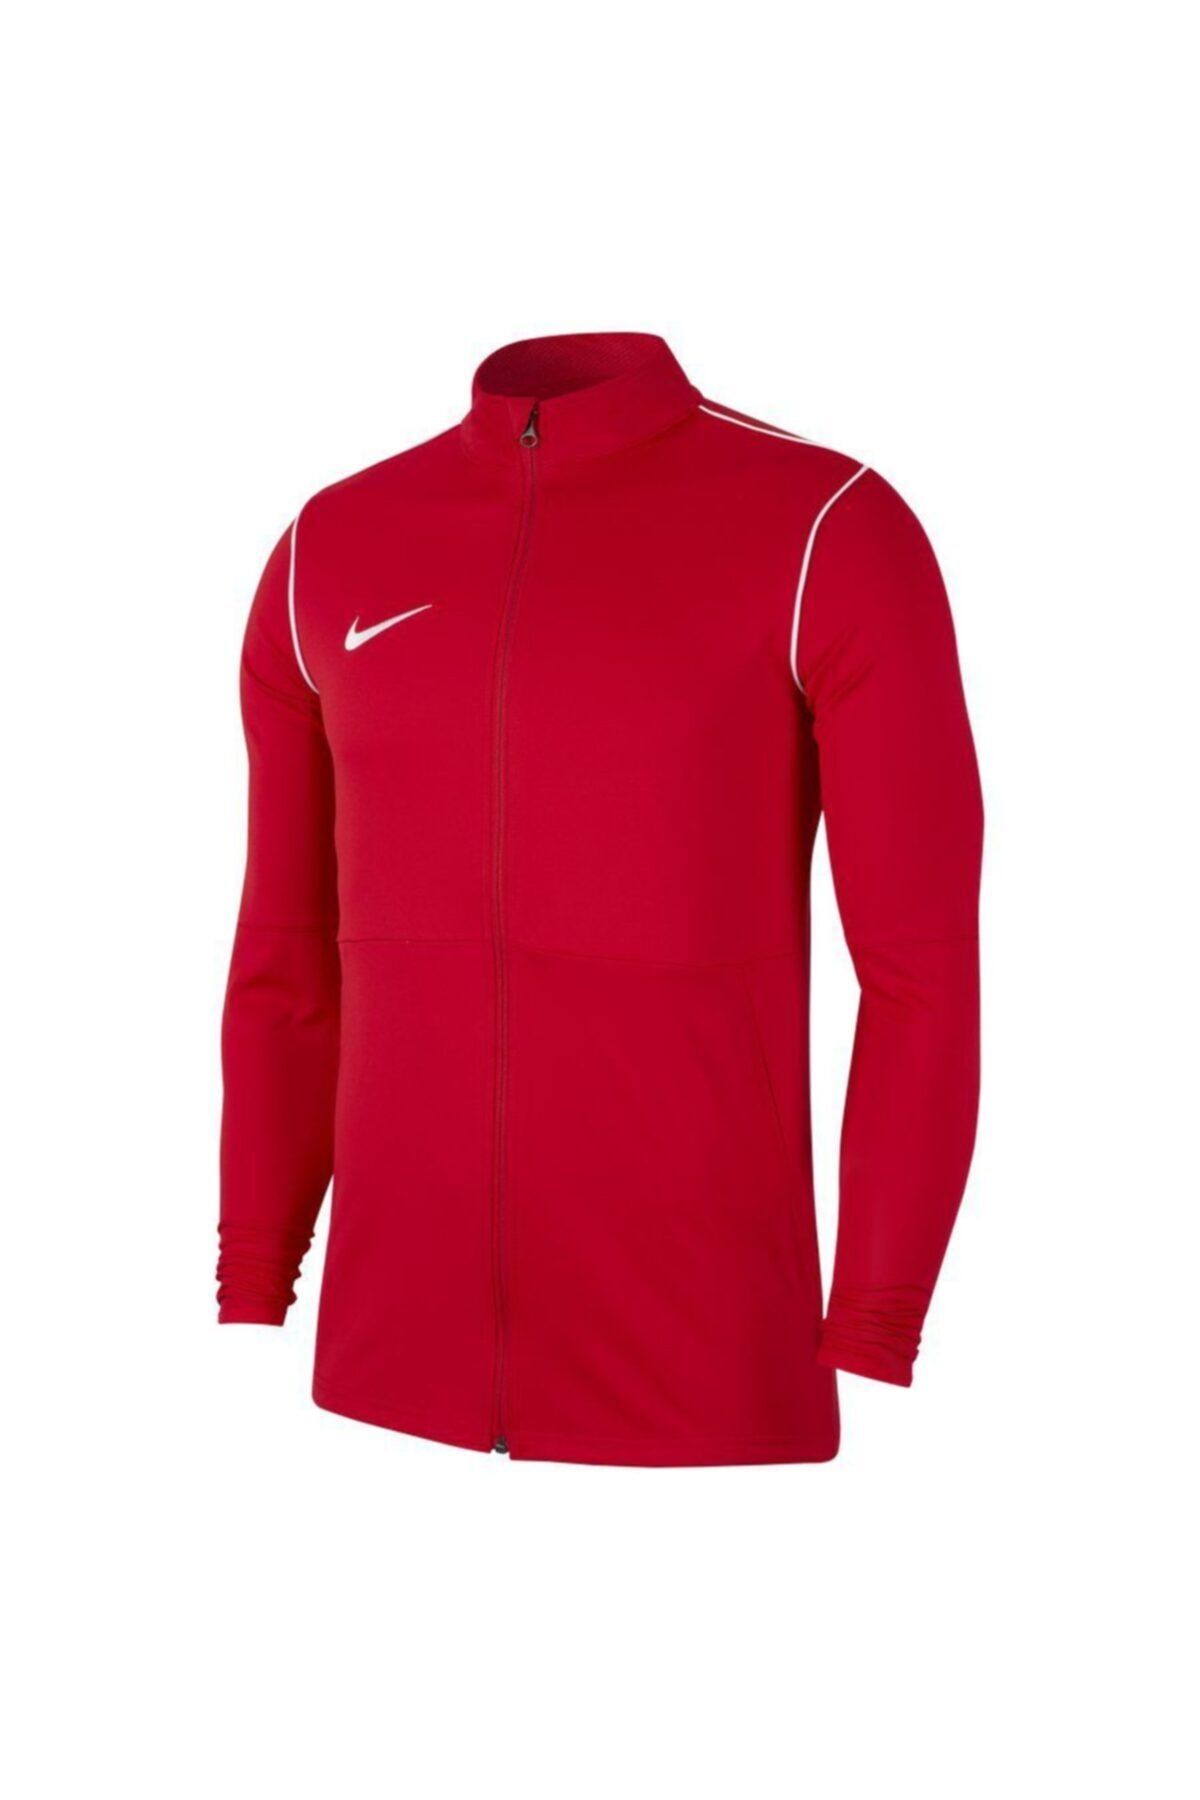 Nike Nıke Park 20 Knit Track Jacket Kırmızı Erkek Eşofman Üst - Bv6885-657